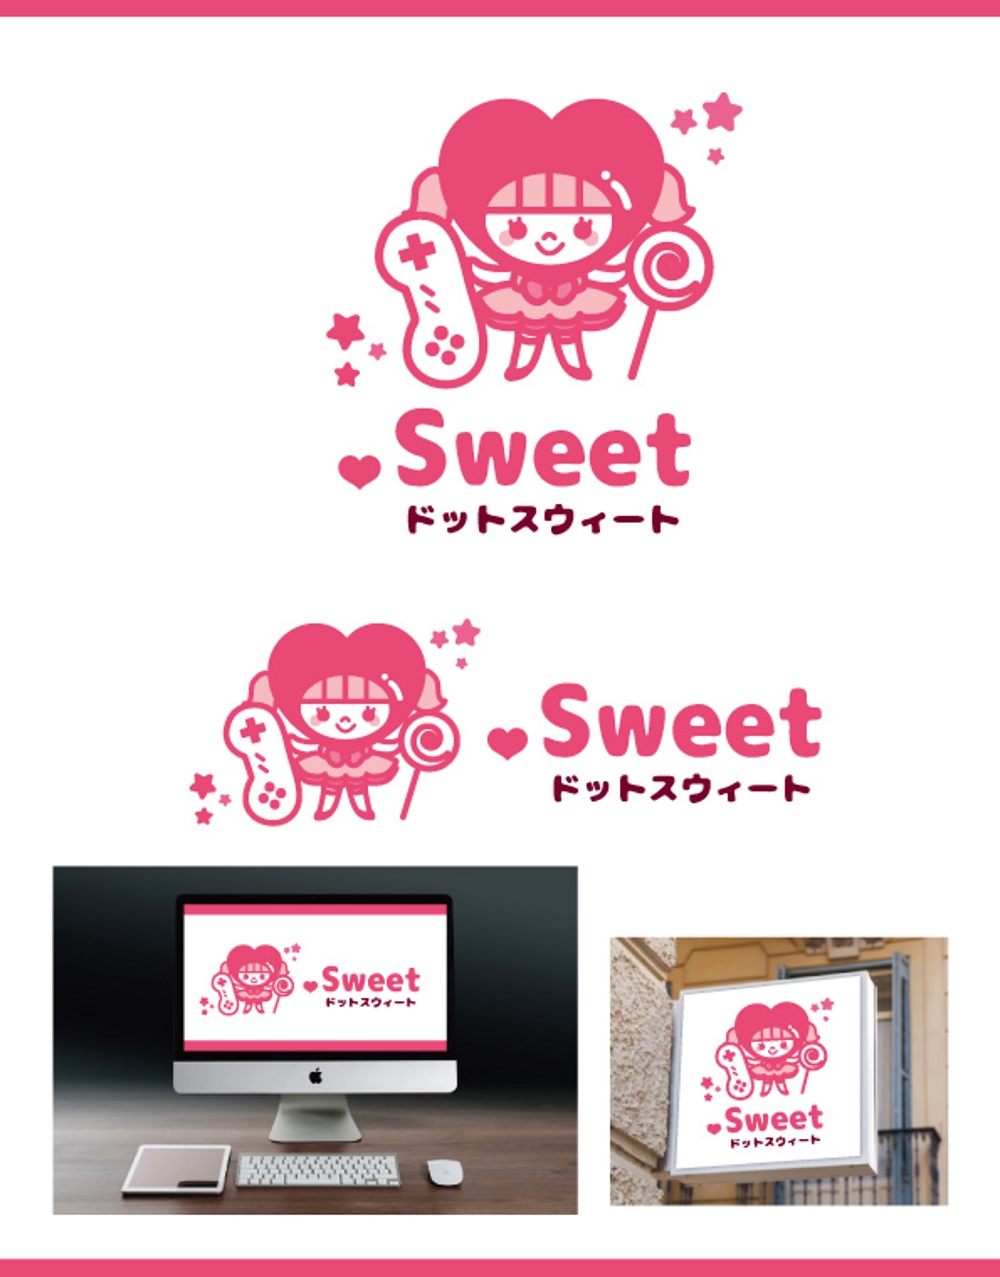 Sweet_2-2.jpg